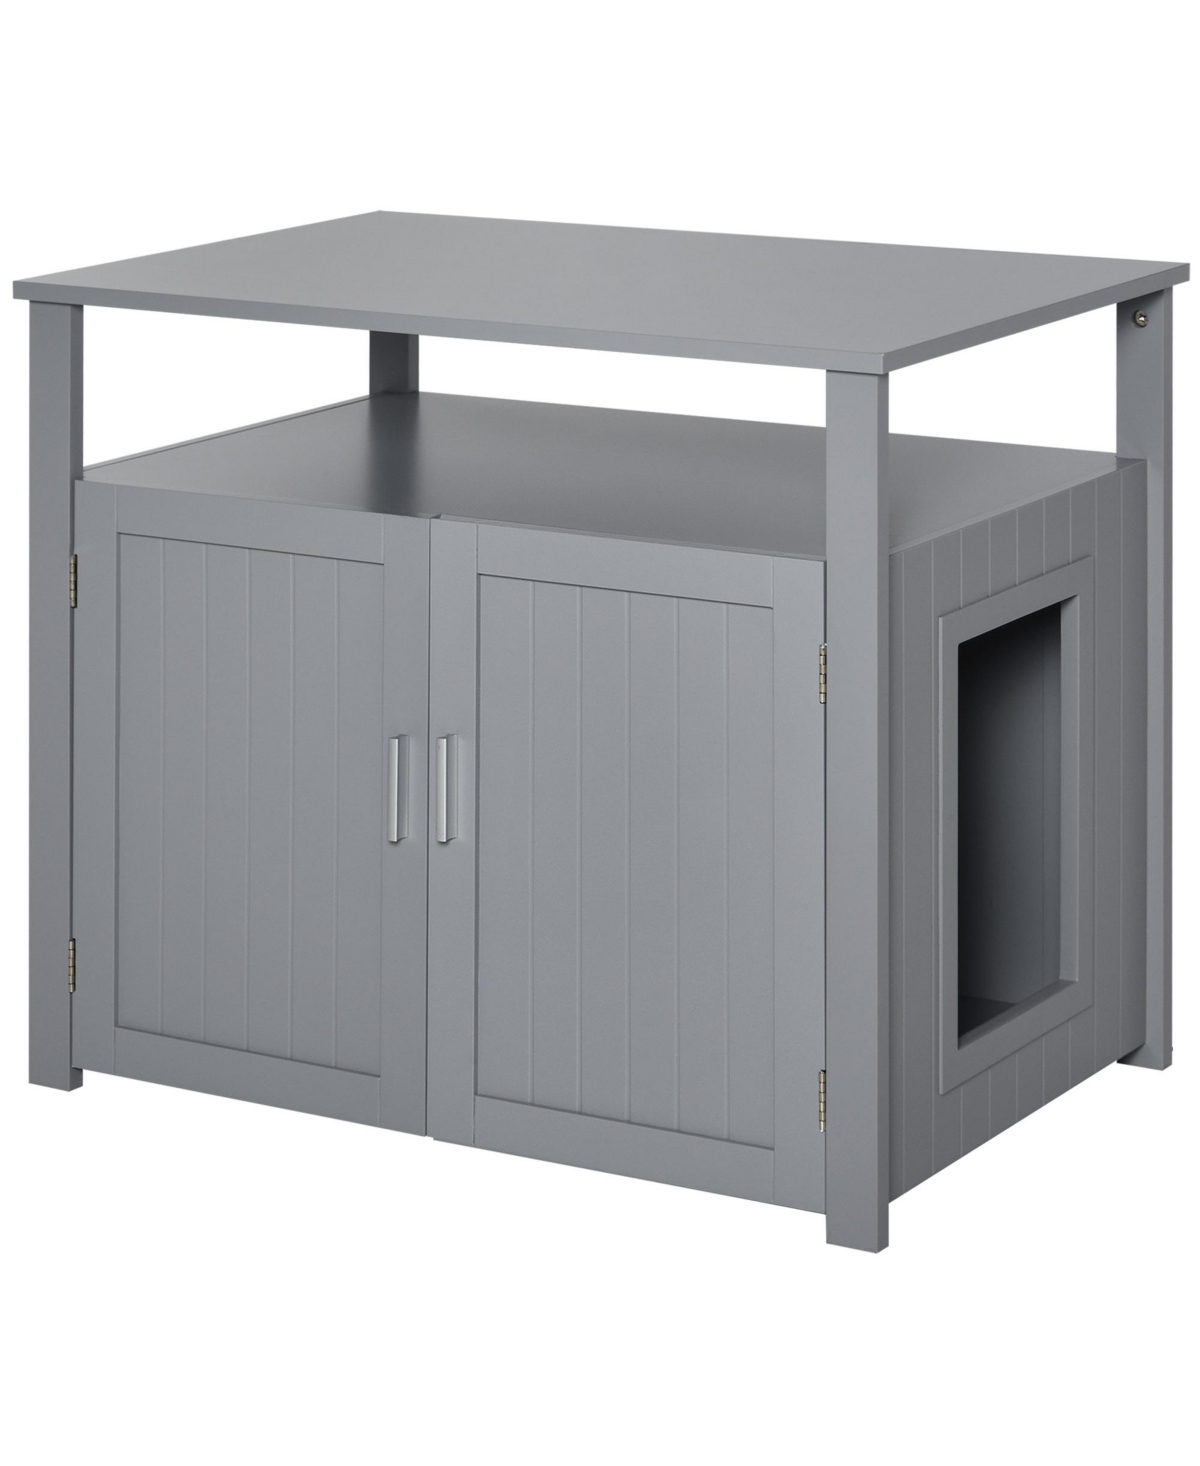 Tabletop Side Table Cat Box Fixture w/ Magnetic Closing Door, Grey - Grey